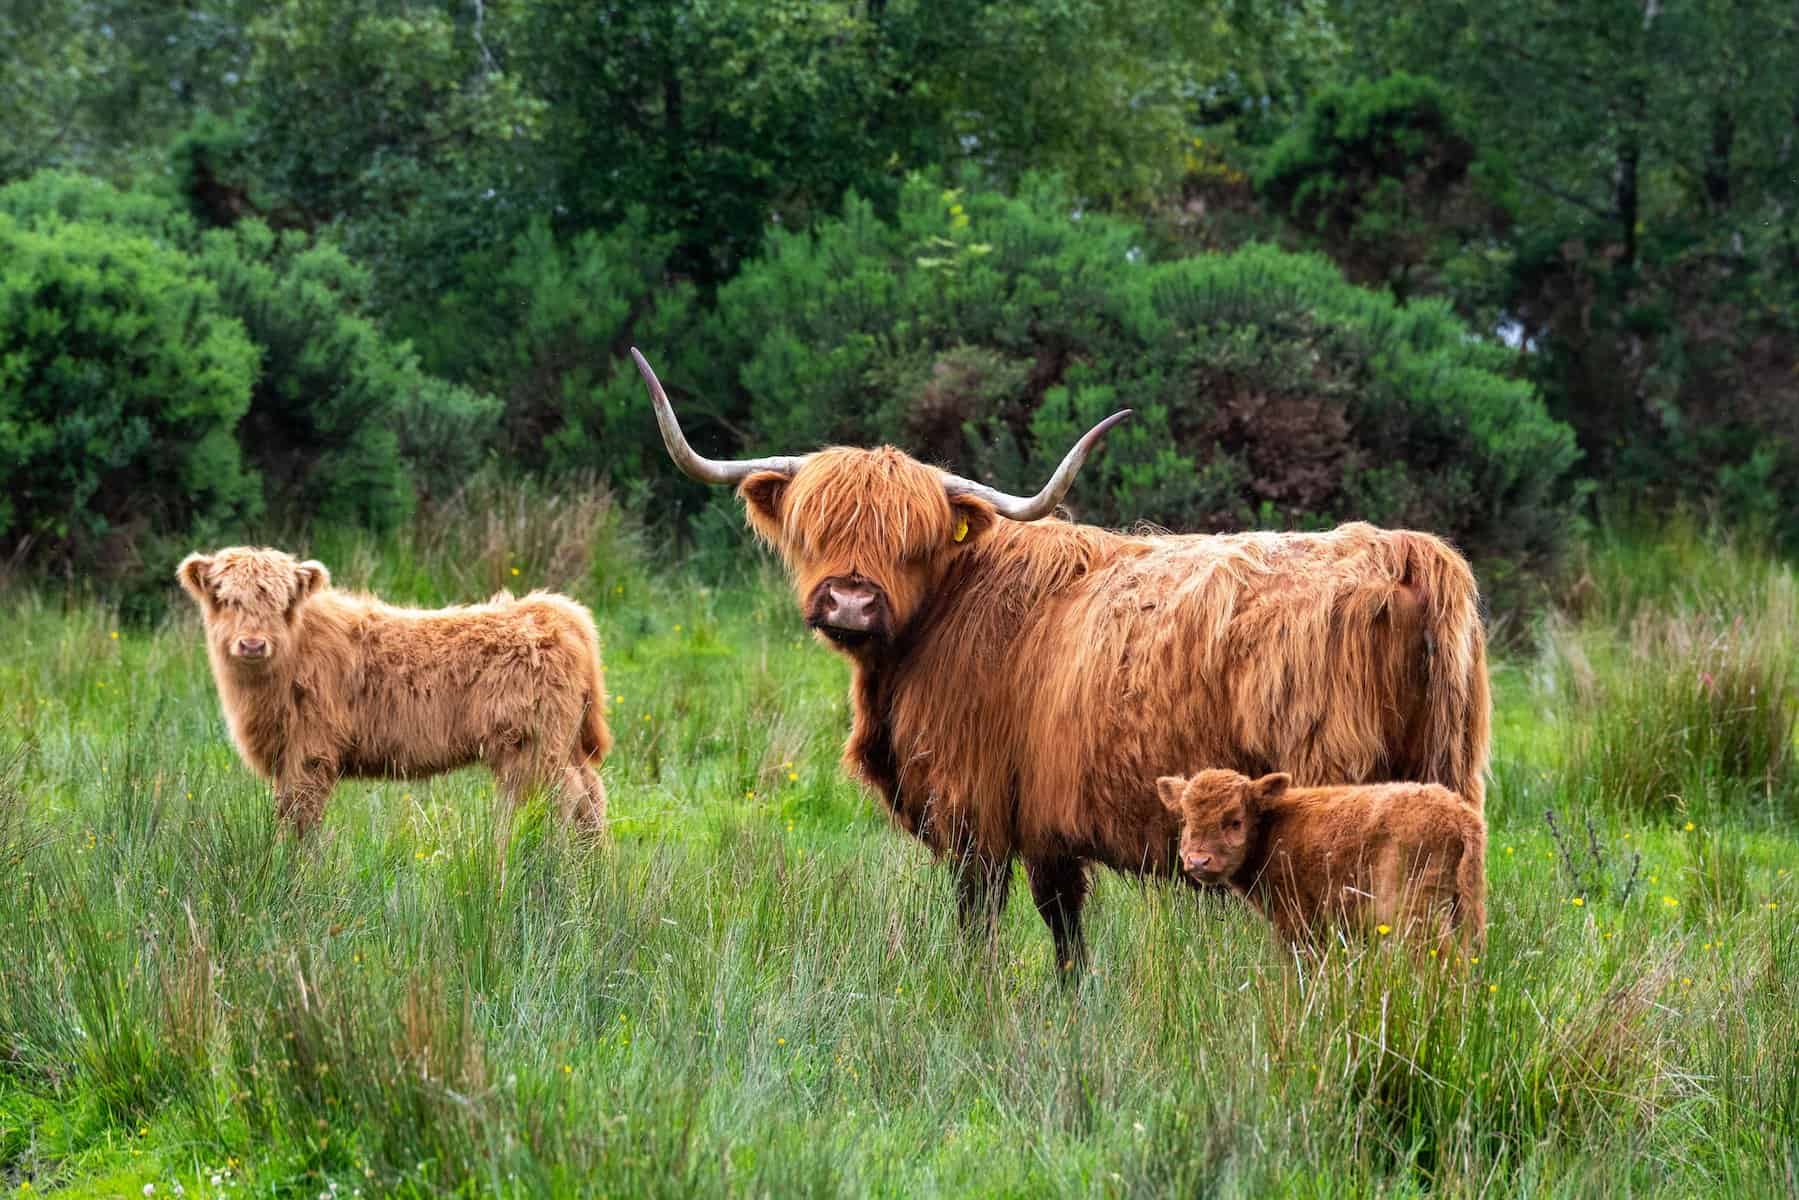 The Highland Cattle Calves